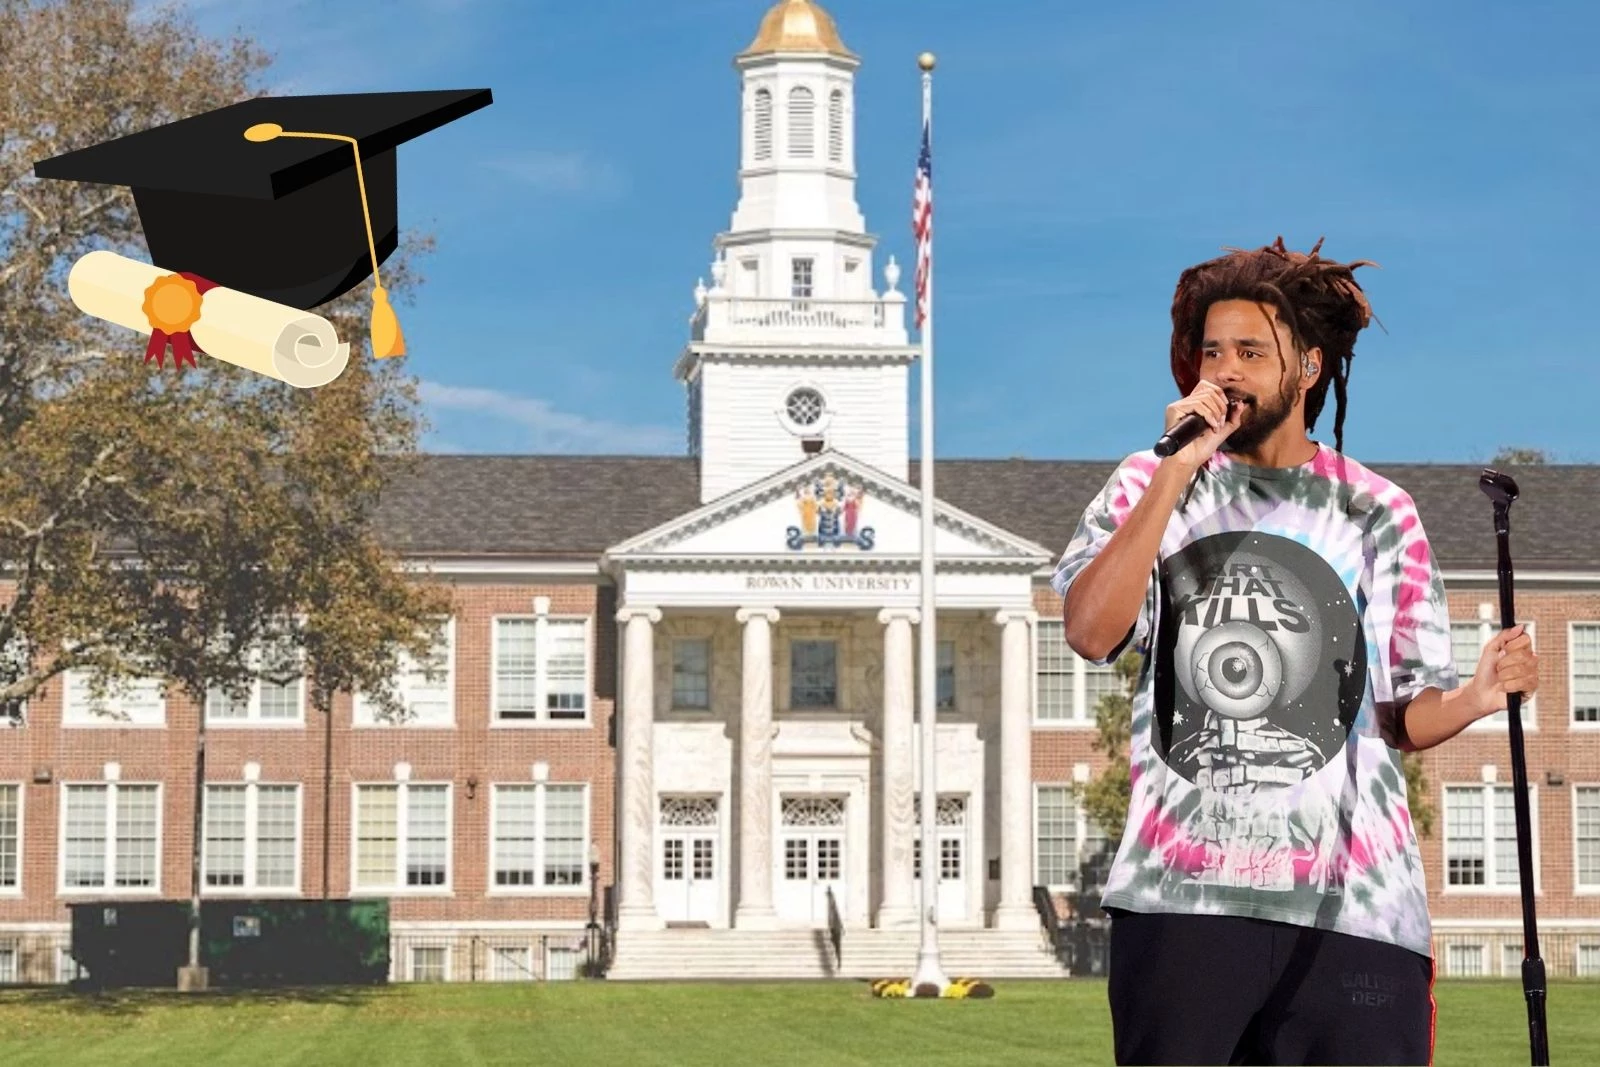 Rapper J. Cole Was Spotted At Rowan University's Graduation